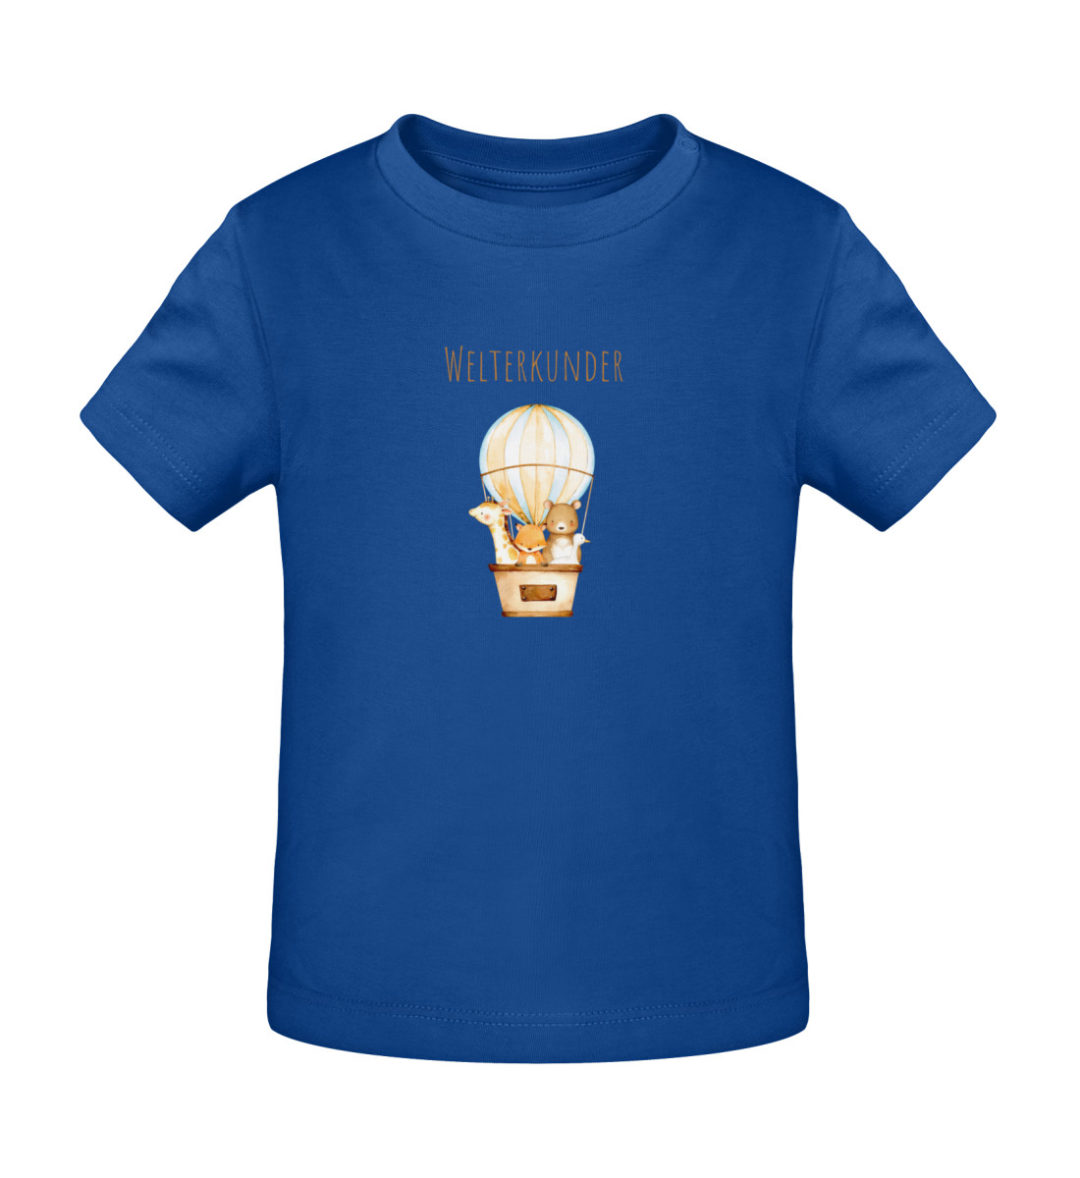 Welterkunder - Baby Creator T-Shirt ST/ST-7106